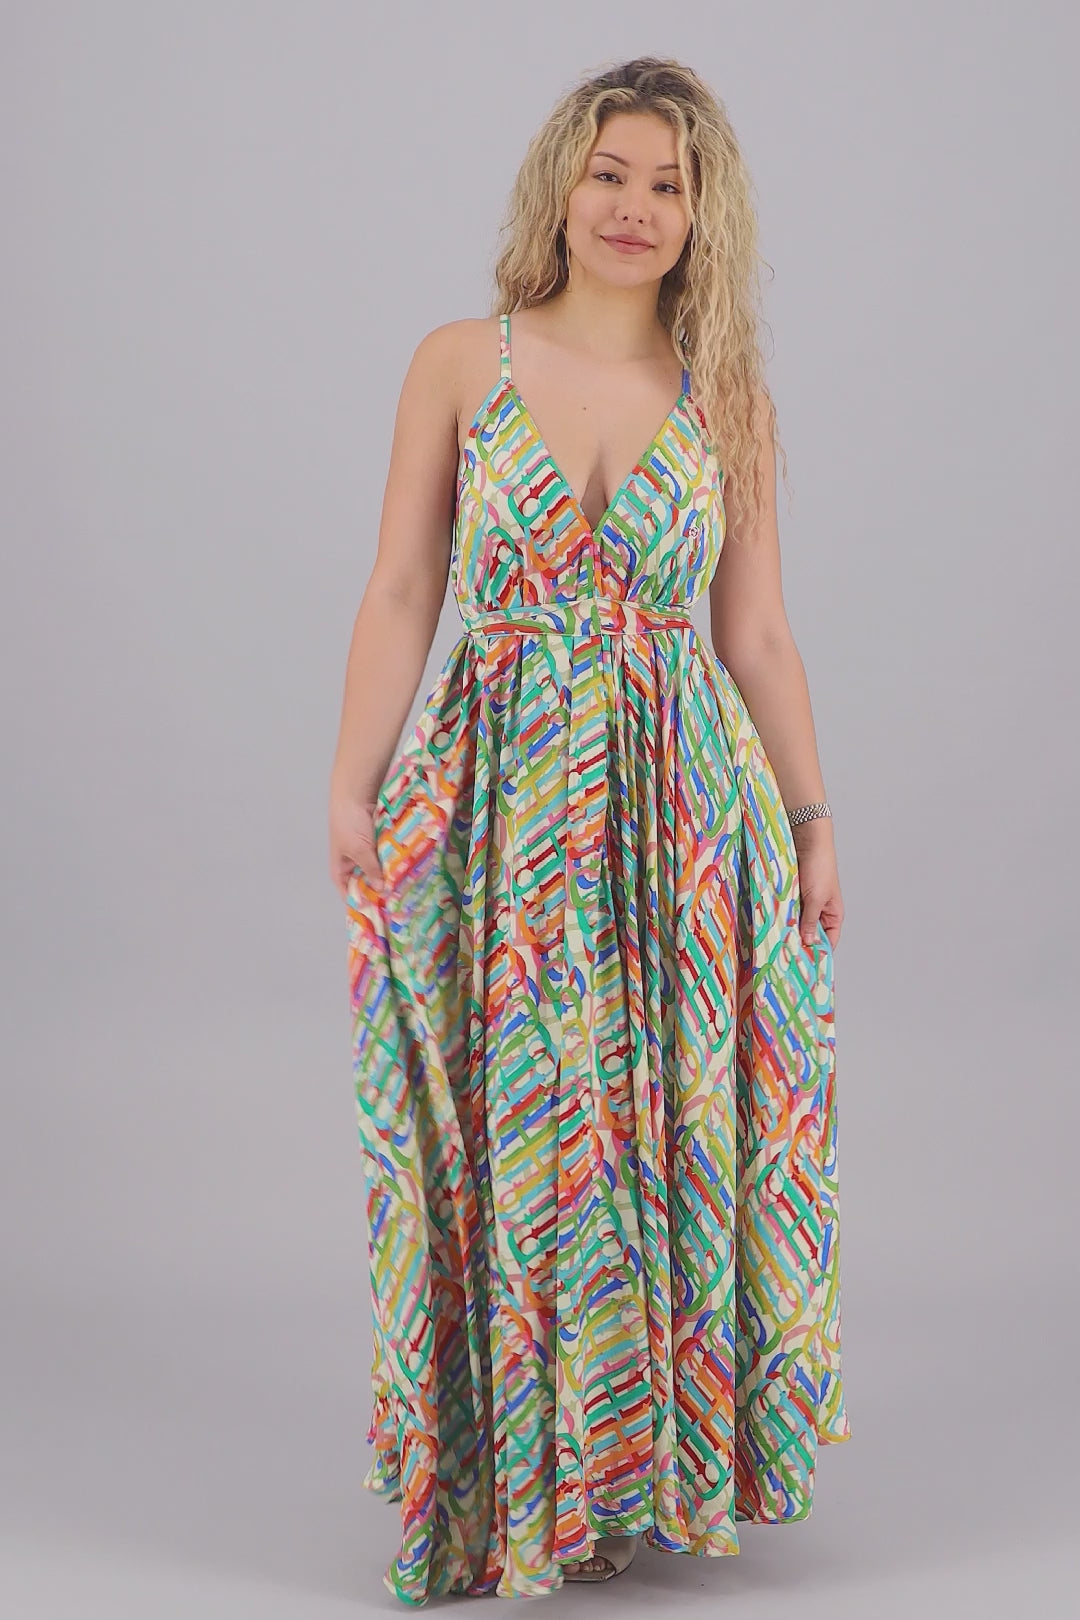 Pastel Pop Theme Silk Dress AB16065